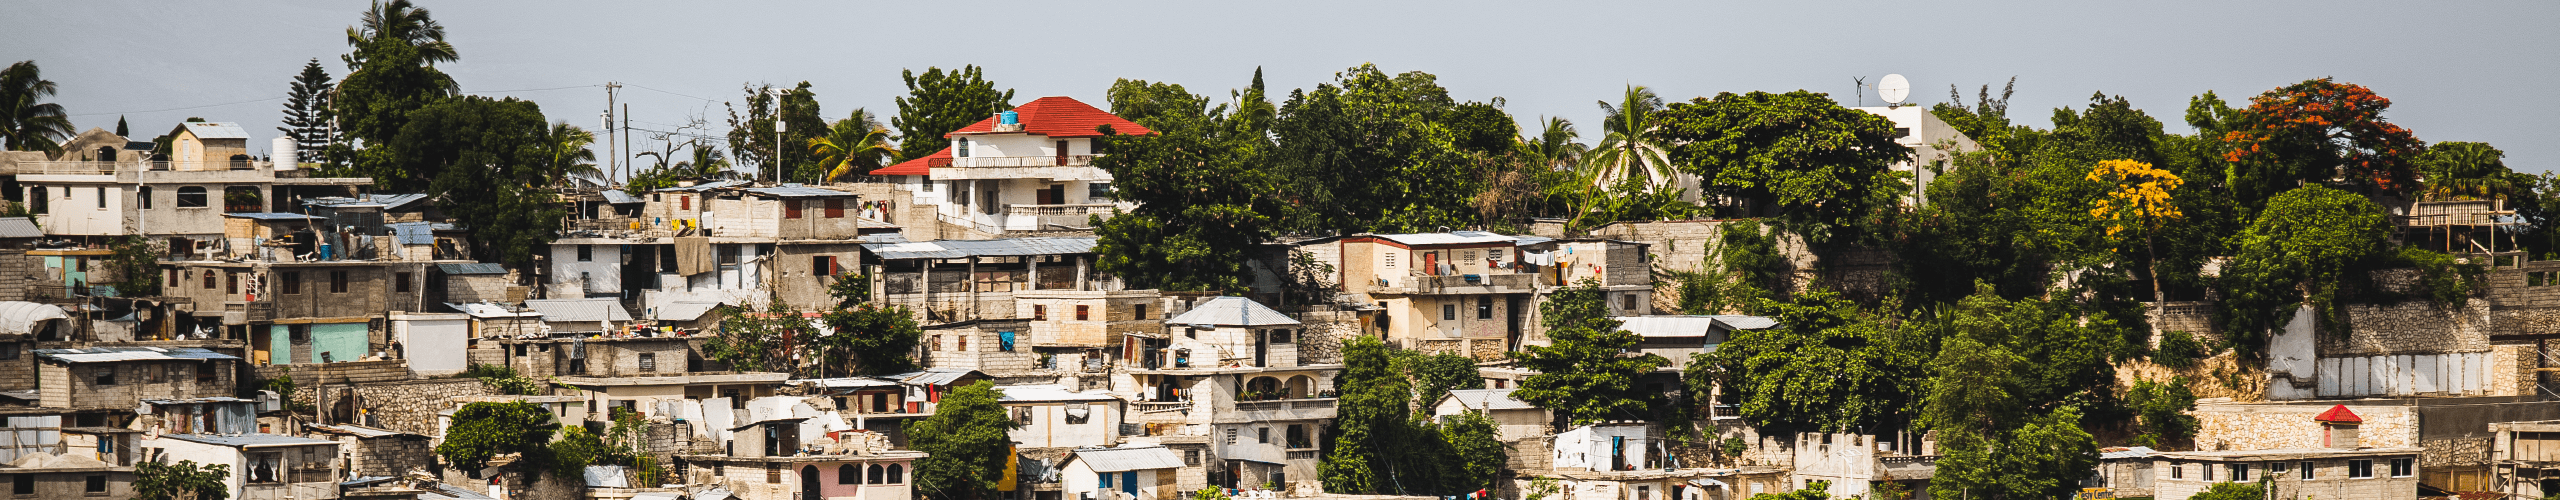 Haiti homes landscape